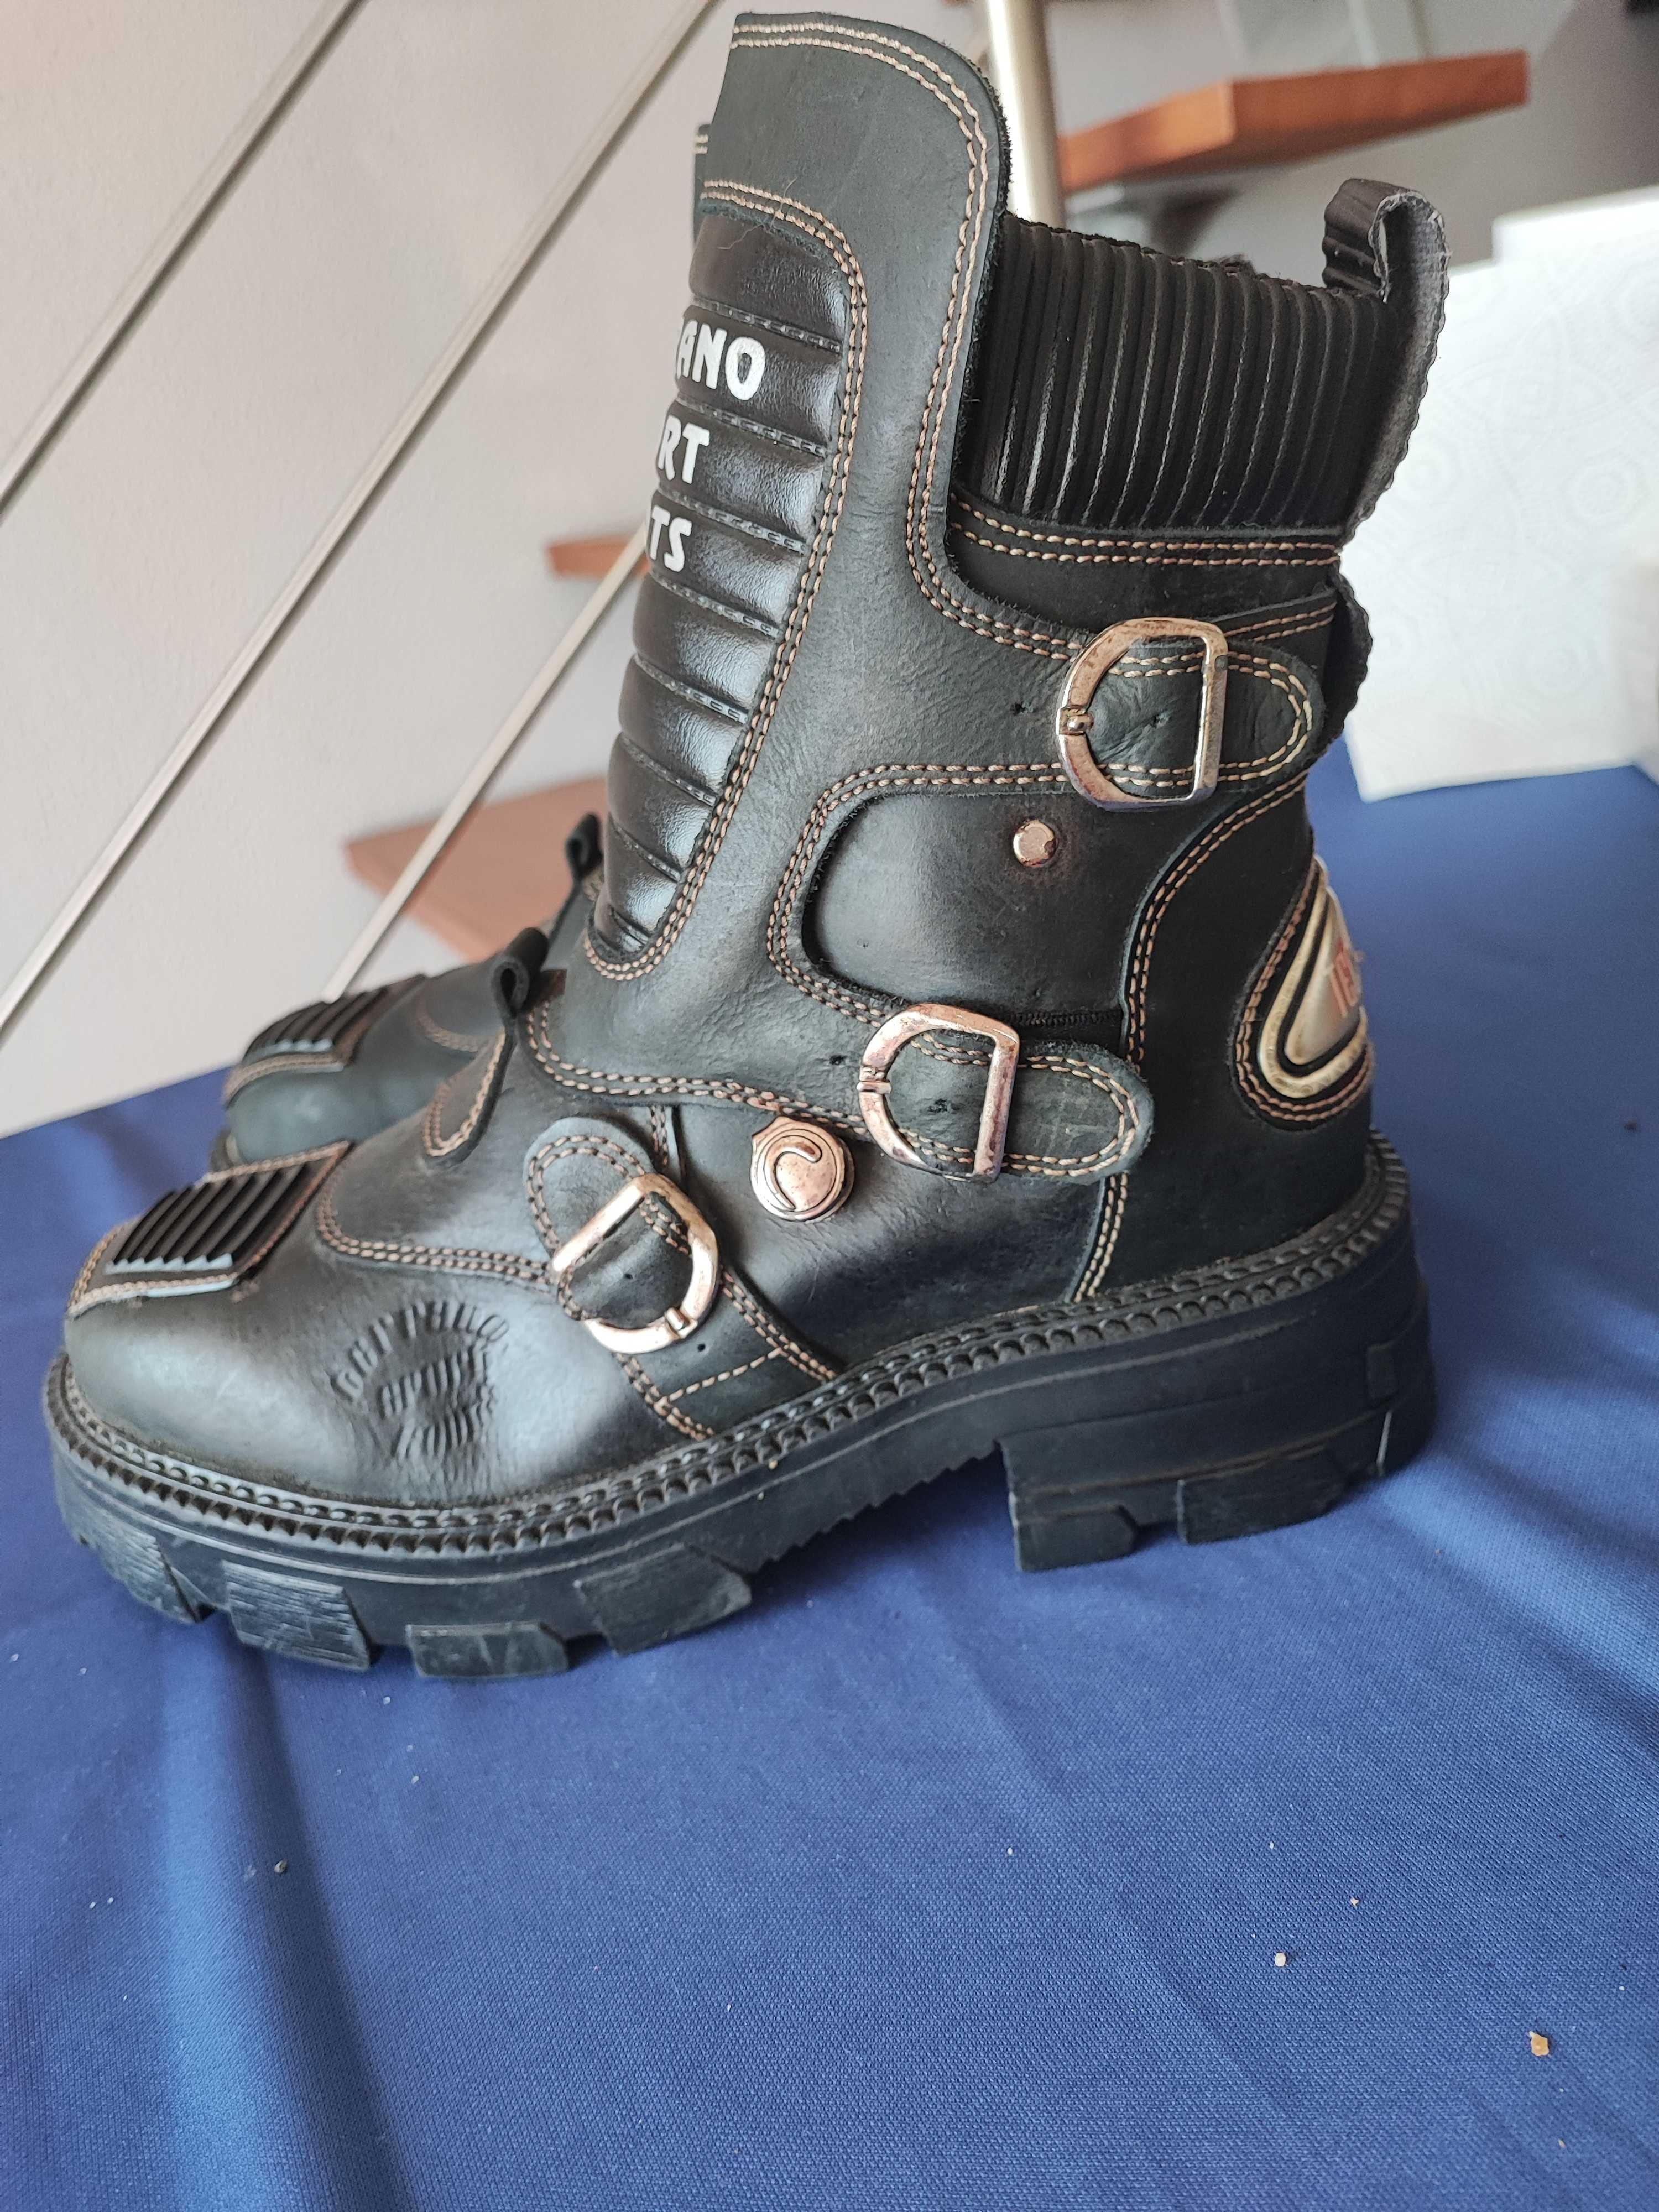 Terrano Sport Boots de qualidade